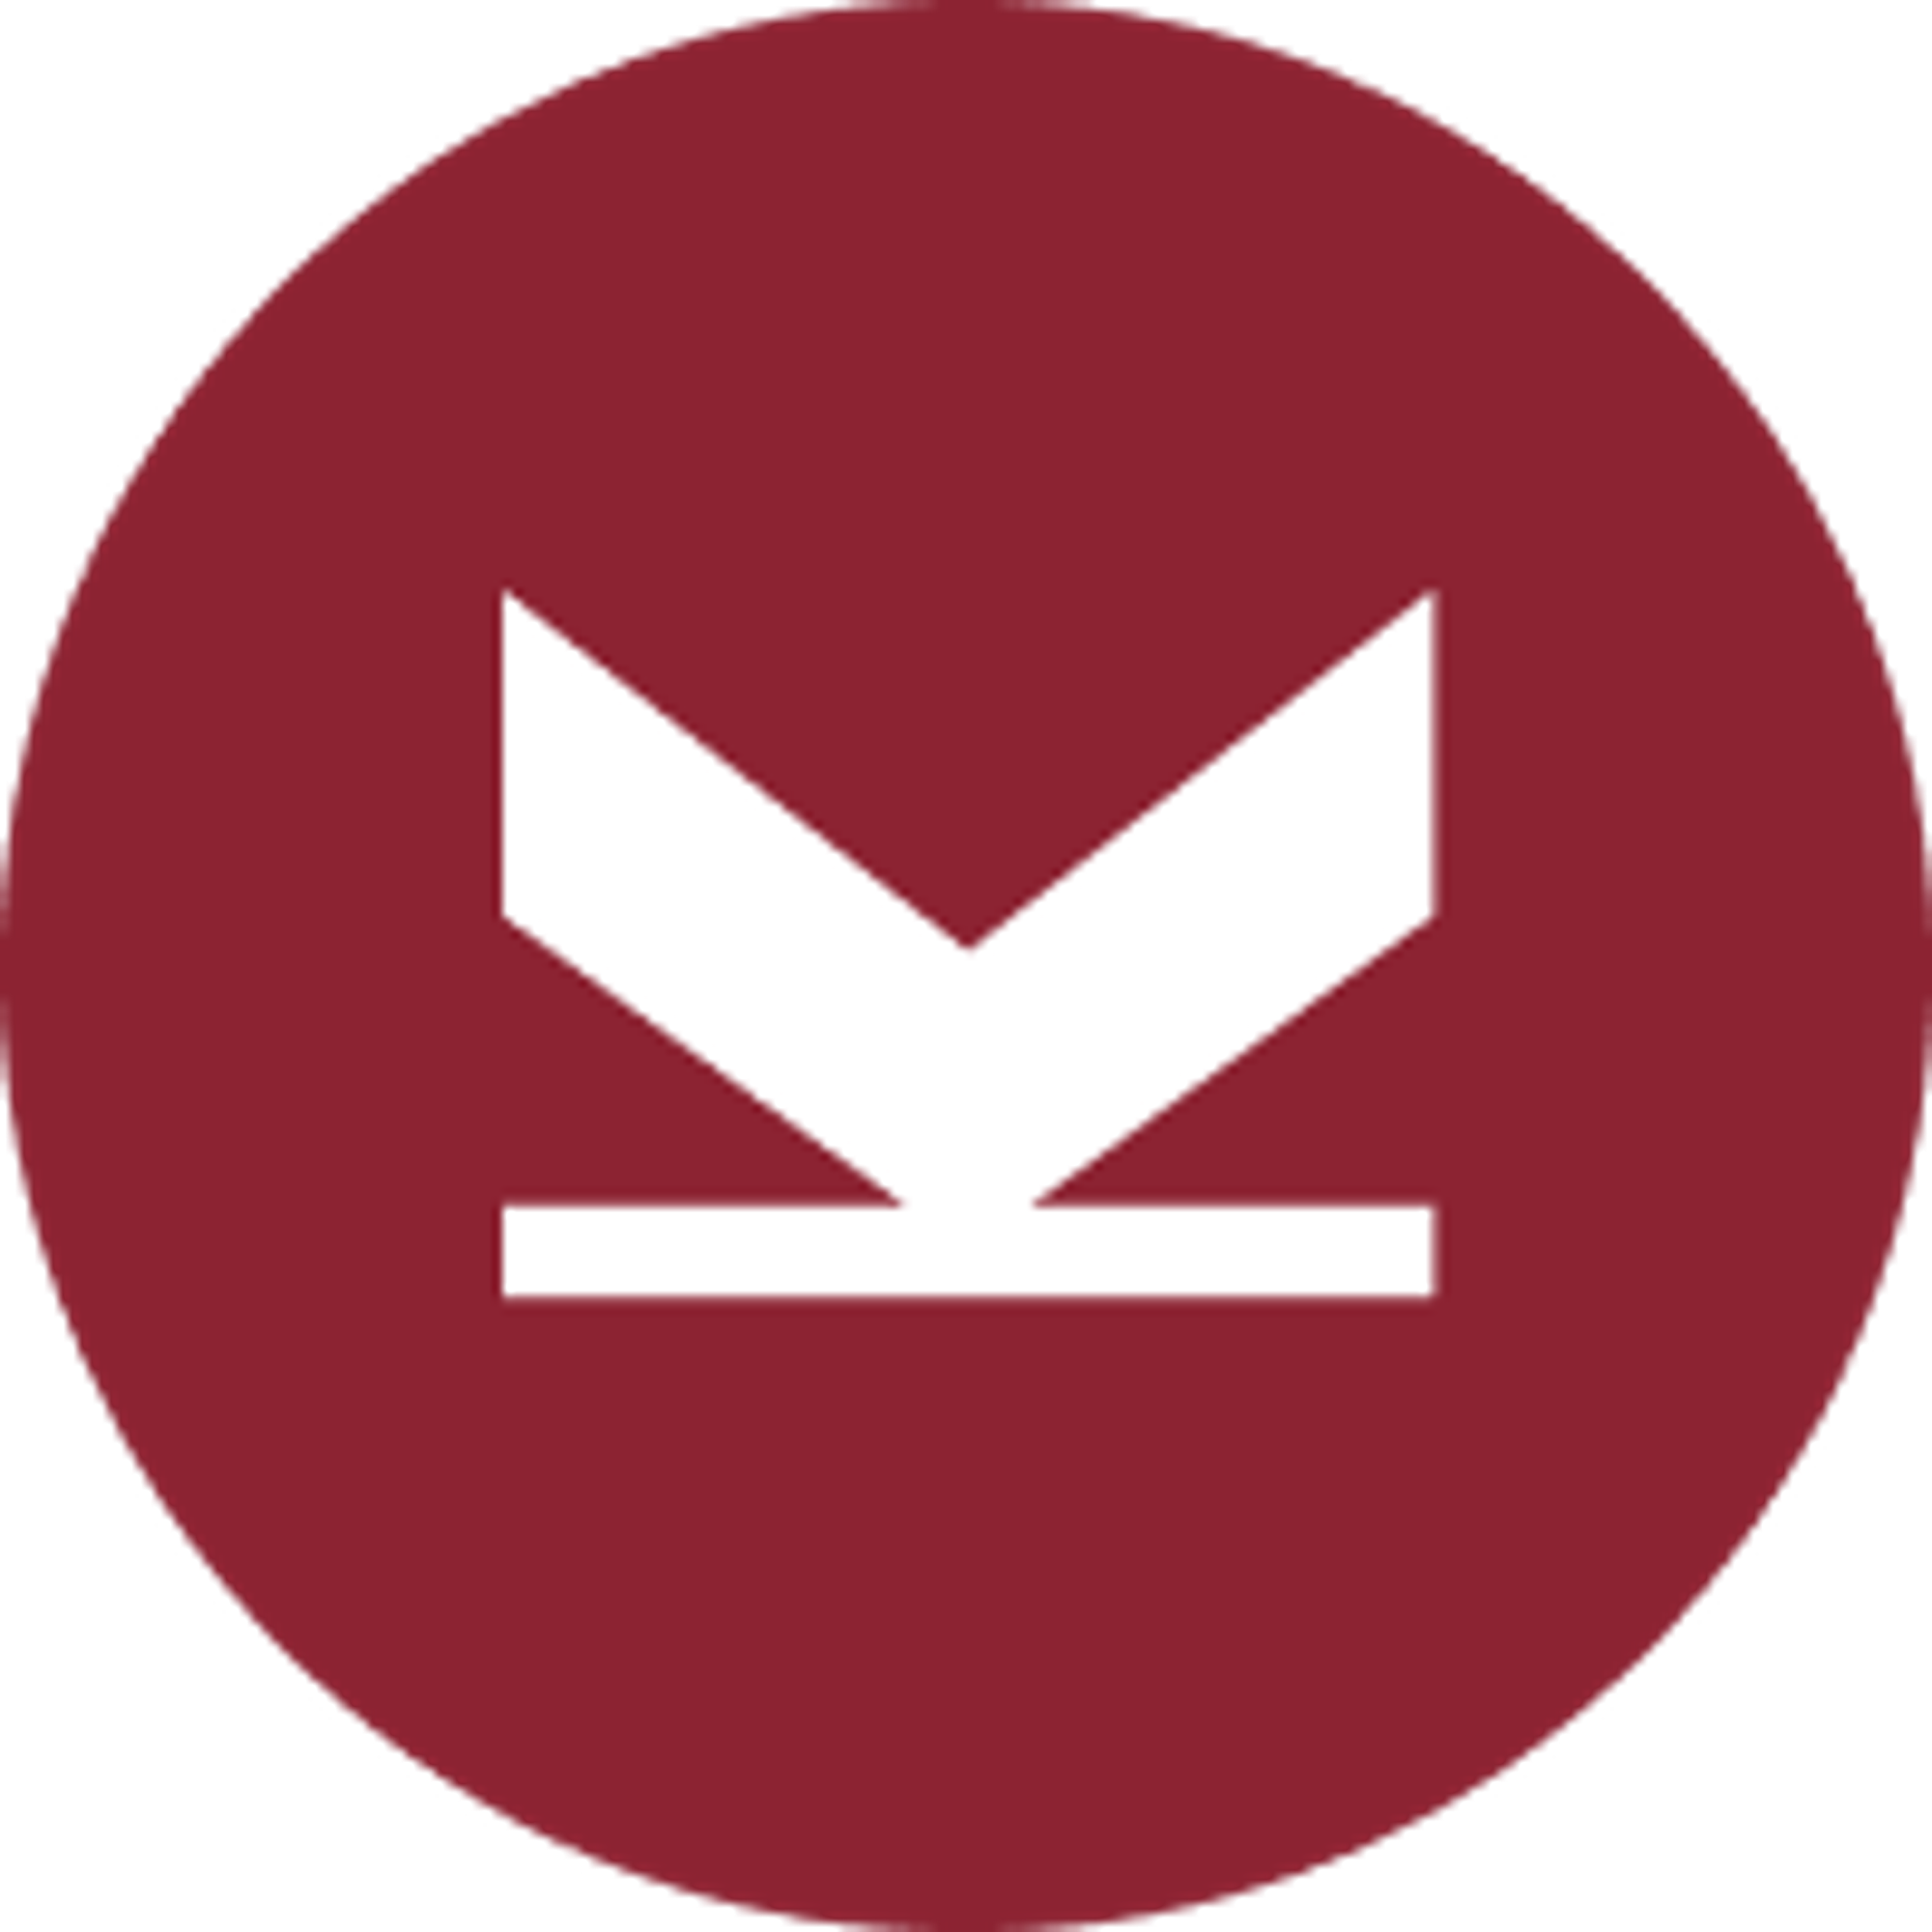 KPU logo icon